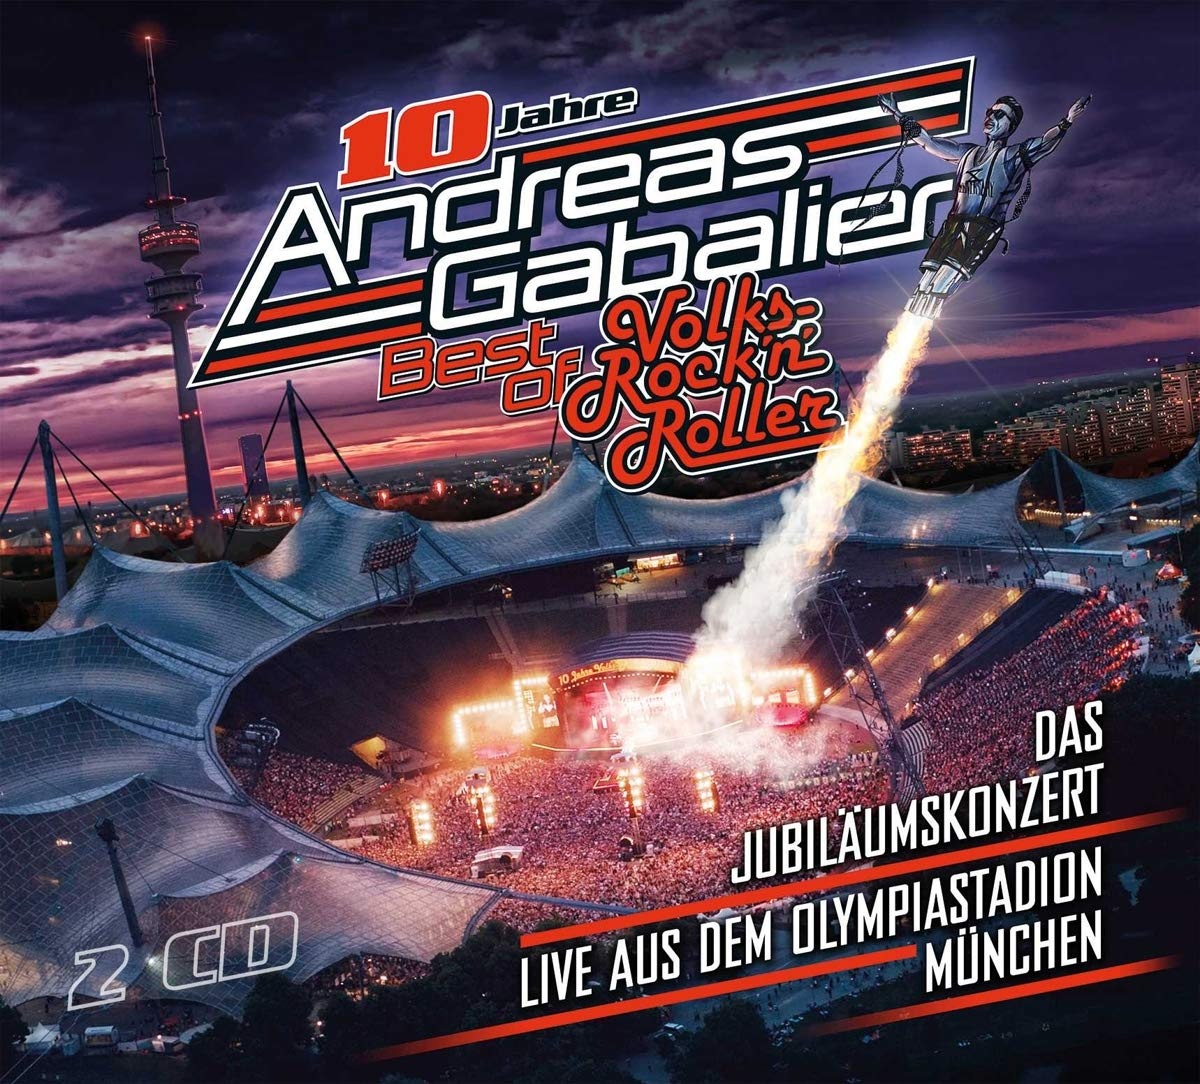 Andreas Gabalier - Best of Volks-Rock'n'Roller - Das Jubiläumskonzert live aus dem Olympiastadion in München (Neu differenzbesteuert)